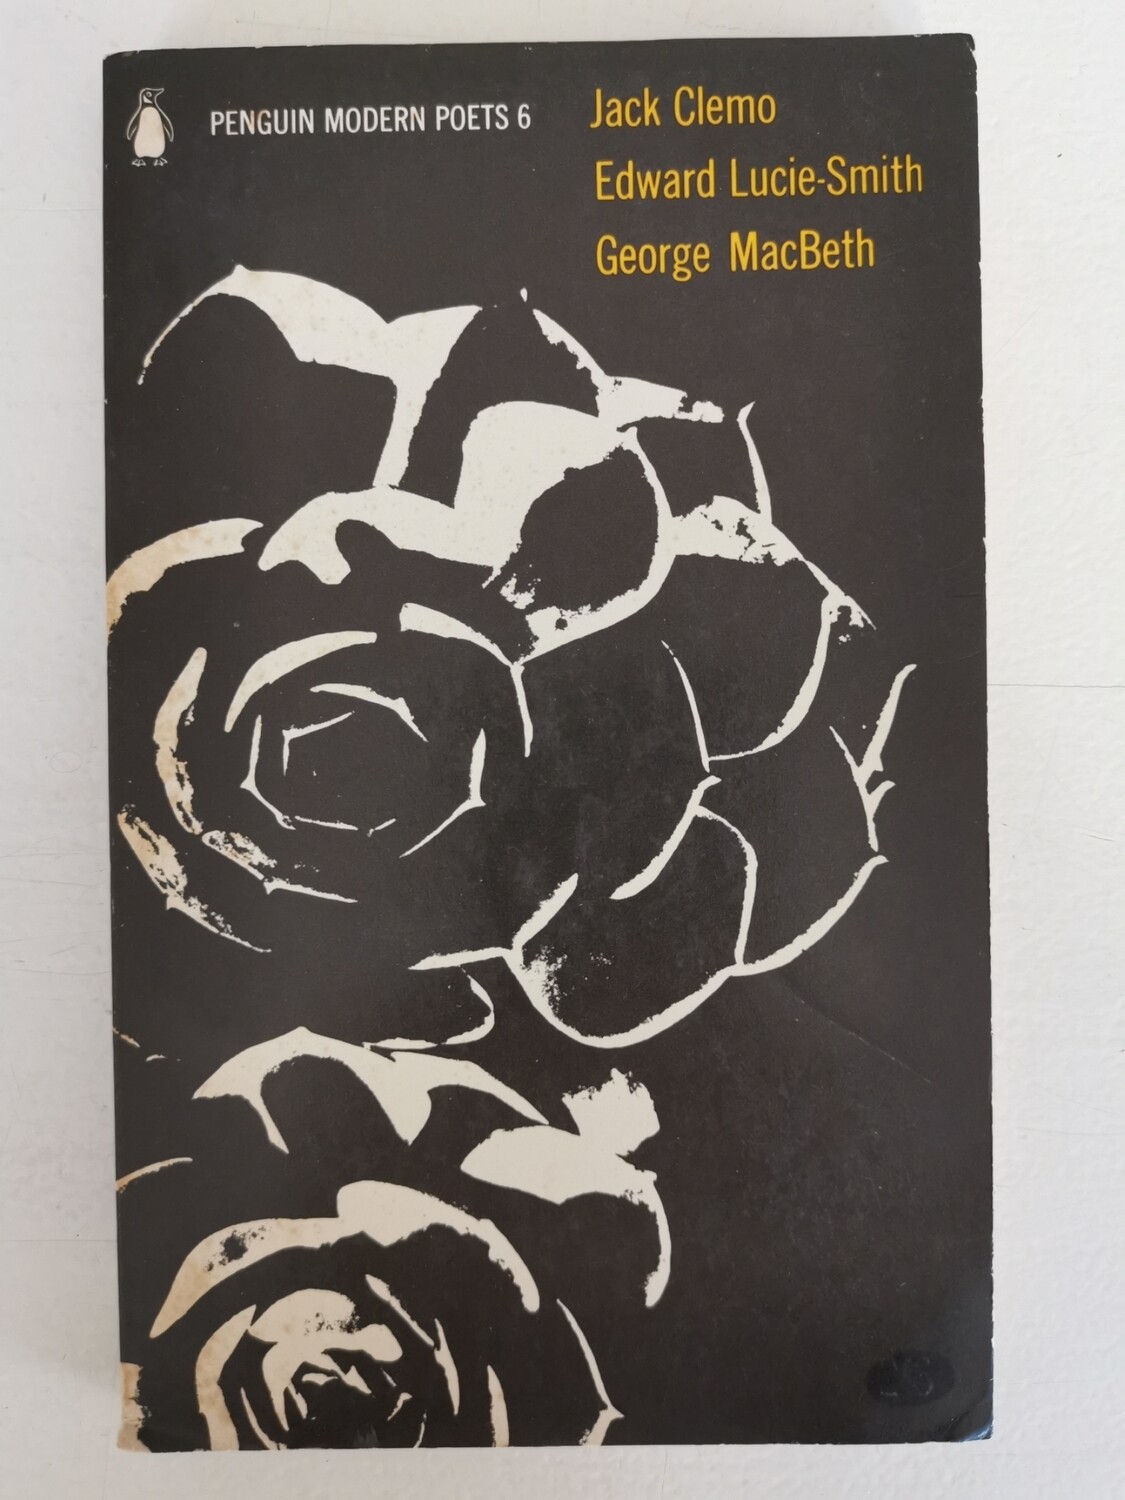 Penguin modern poets 6, Clemo Lucie-Smith Macbeth